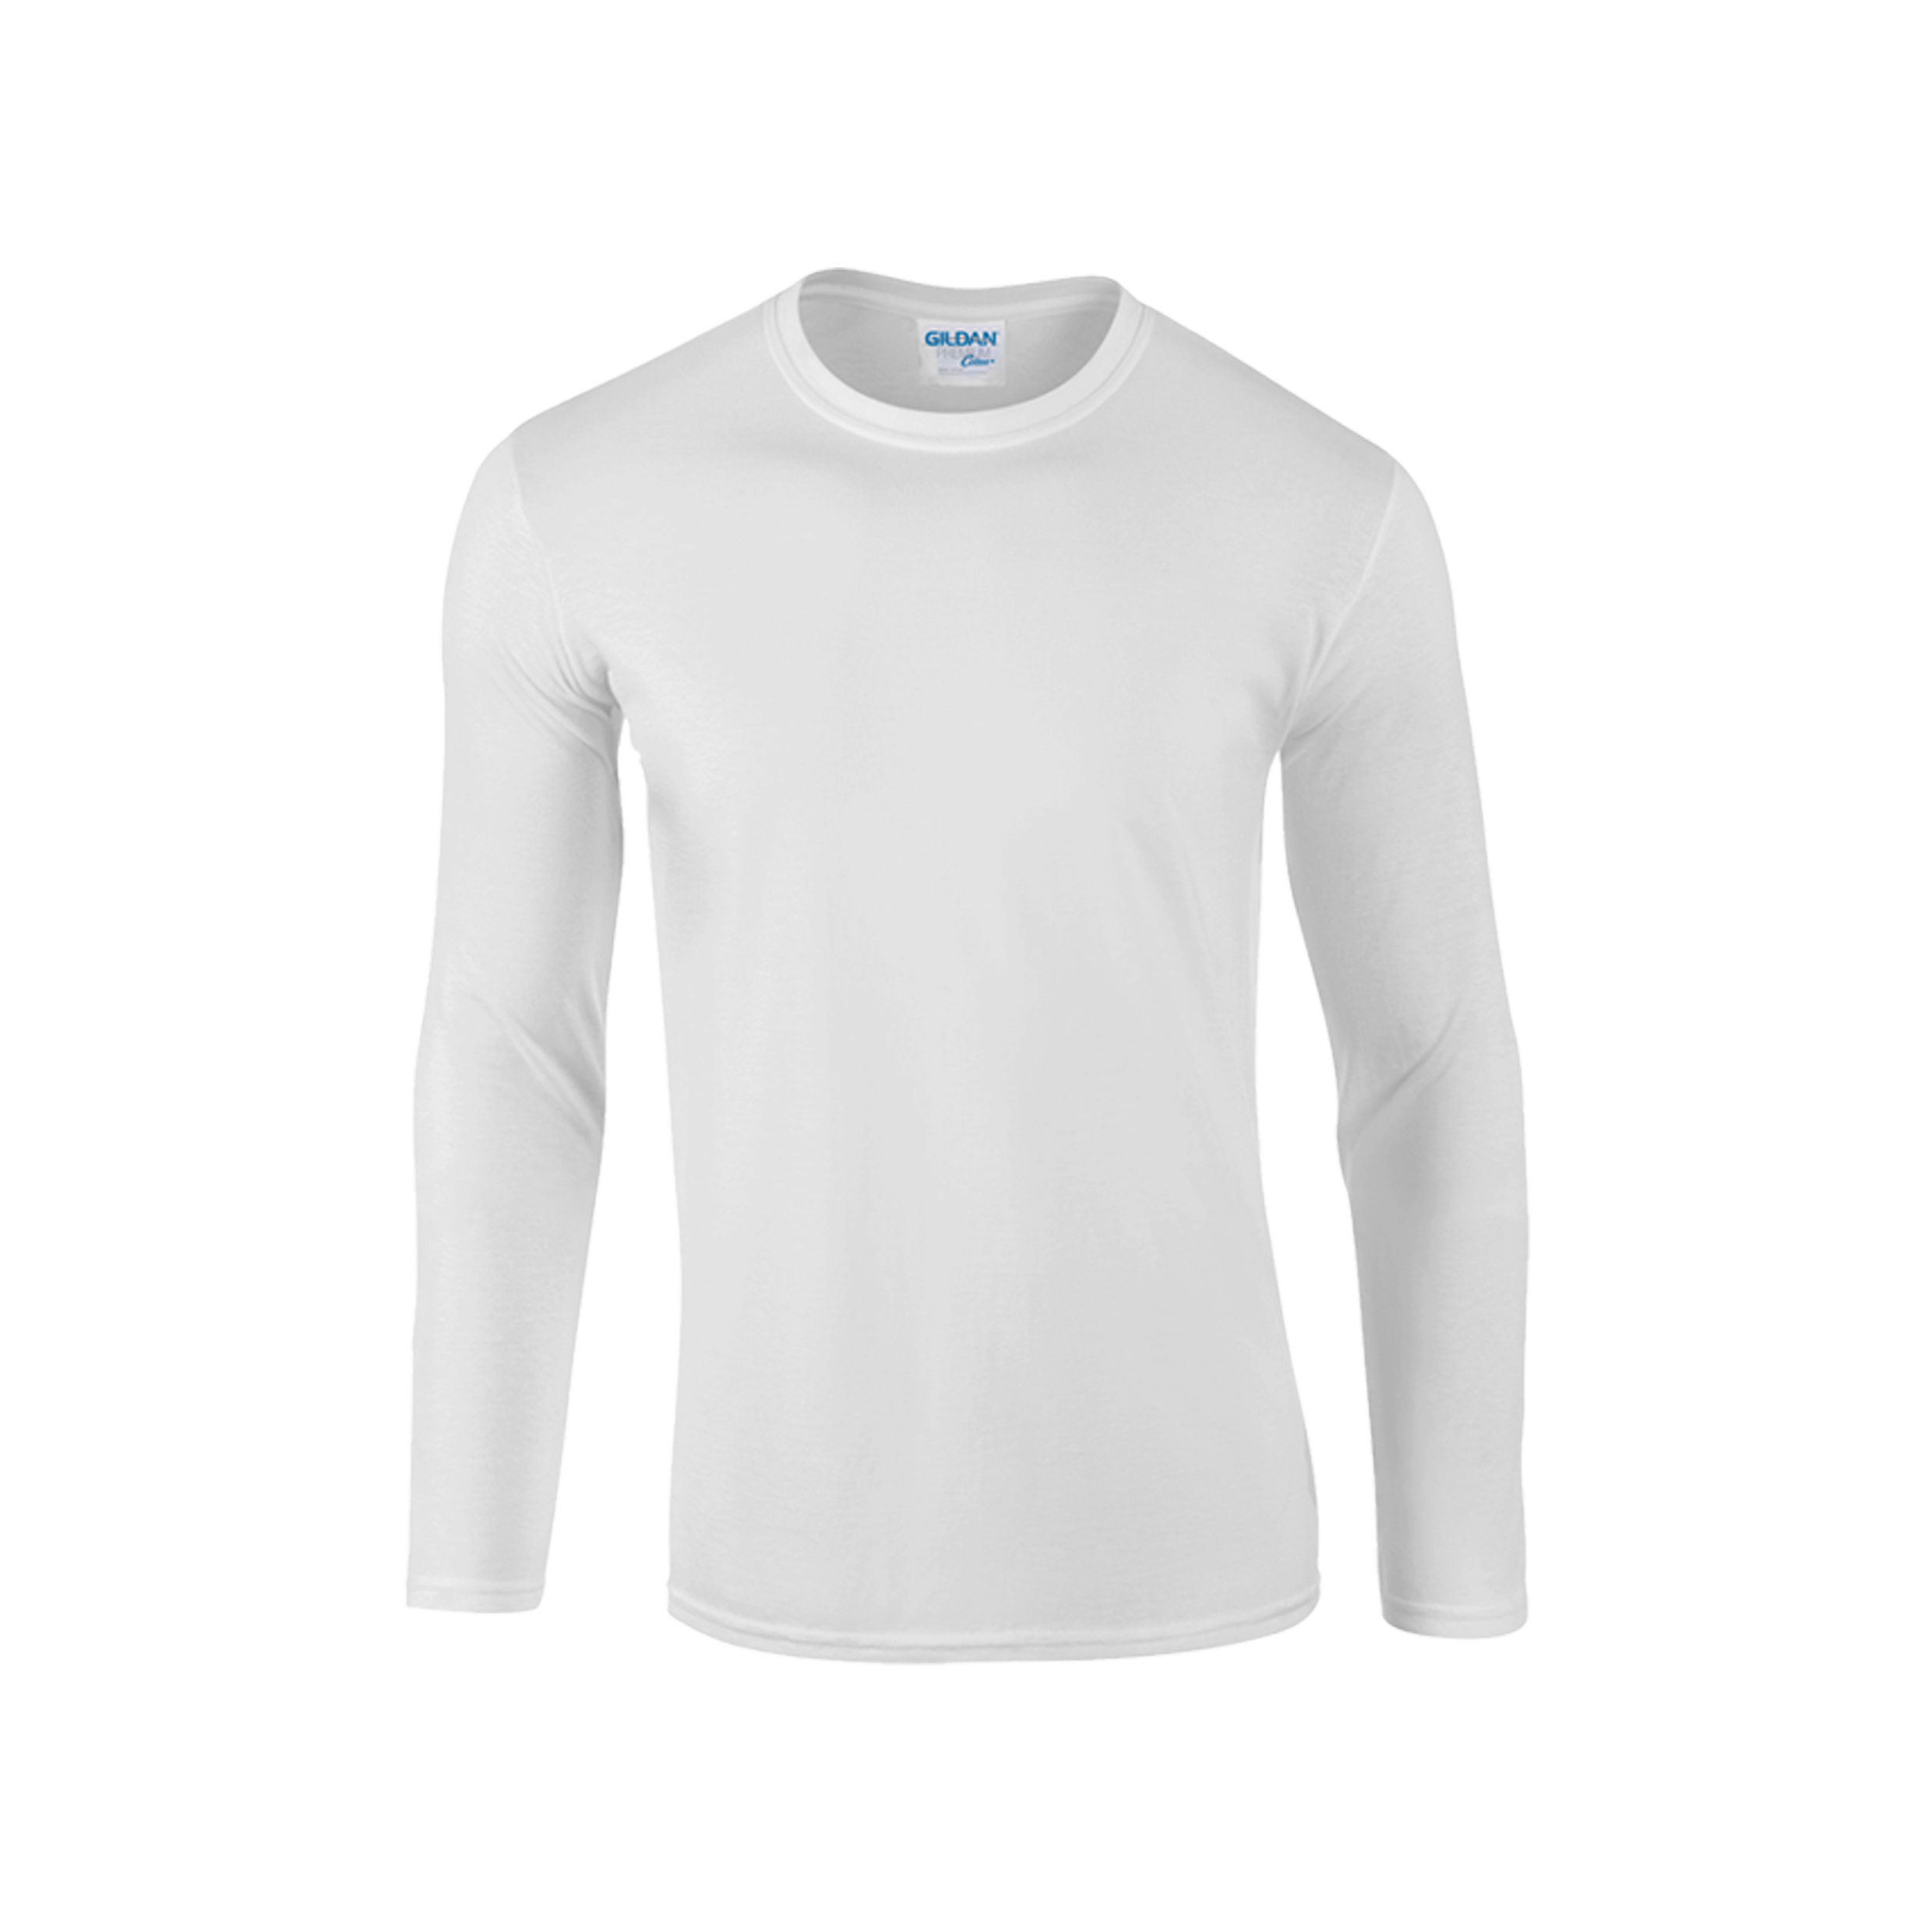 Download Gildan Premium Cotton Adult Long Sleeve T-Shirt 76400 180g/m2 - 5 Colors | T Shirt 2 u / Online ...